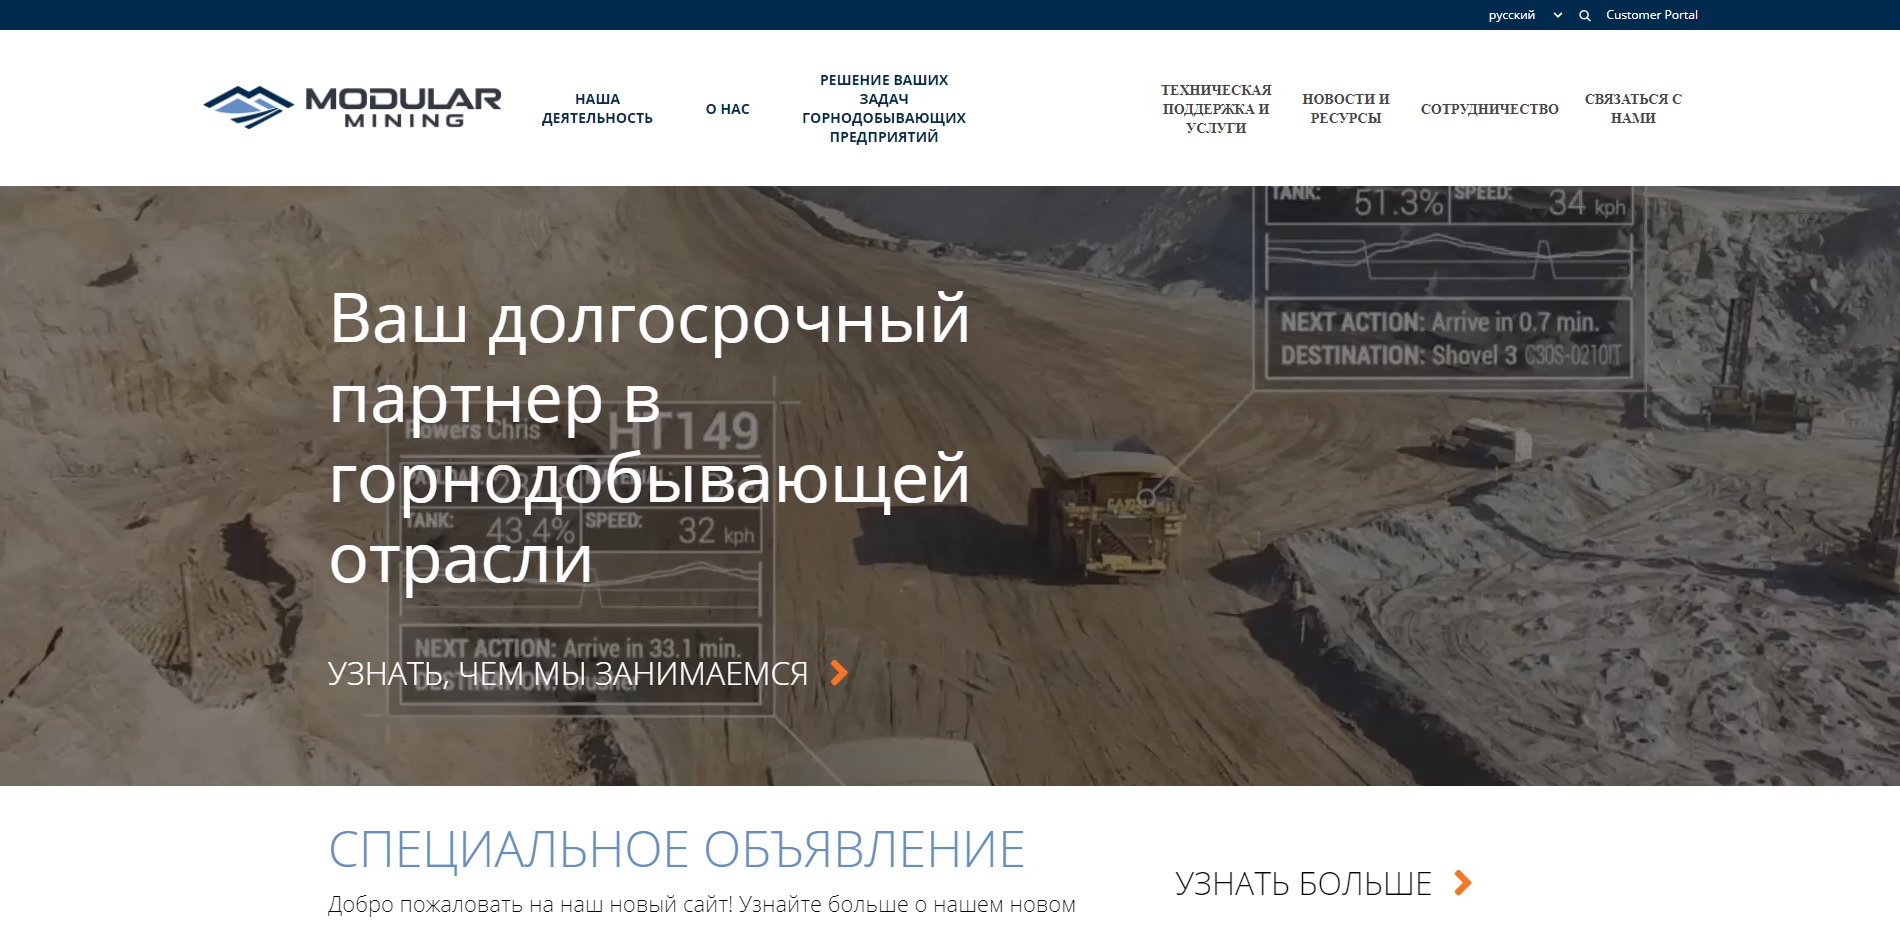 A screenshot of the modular mining website in Russian